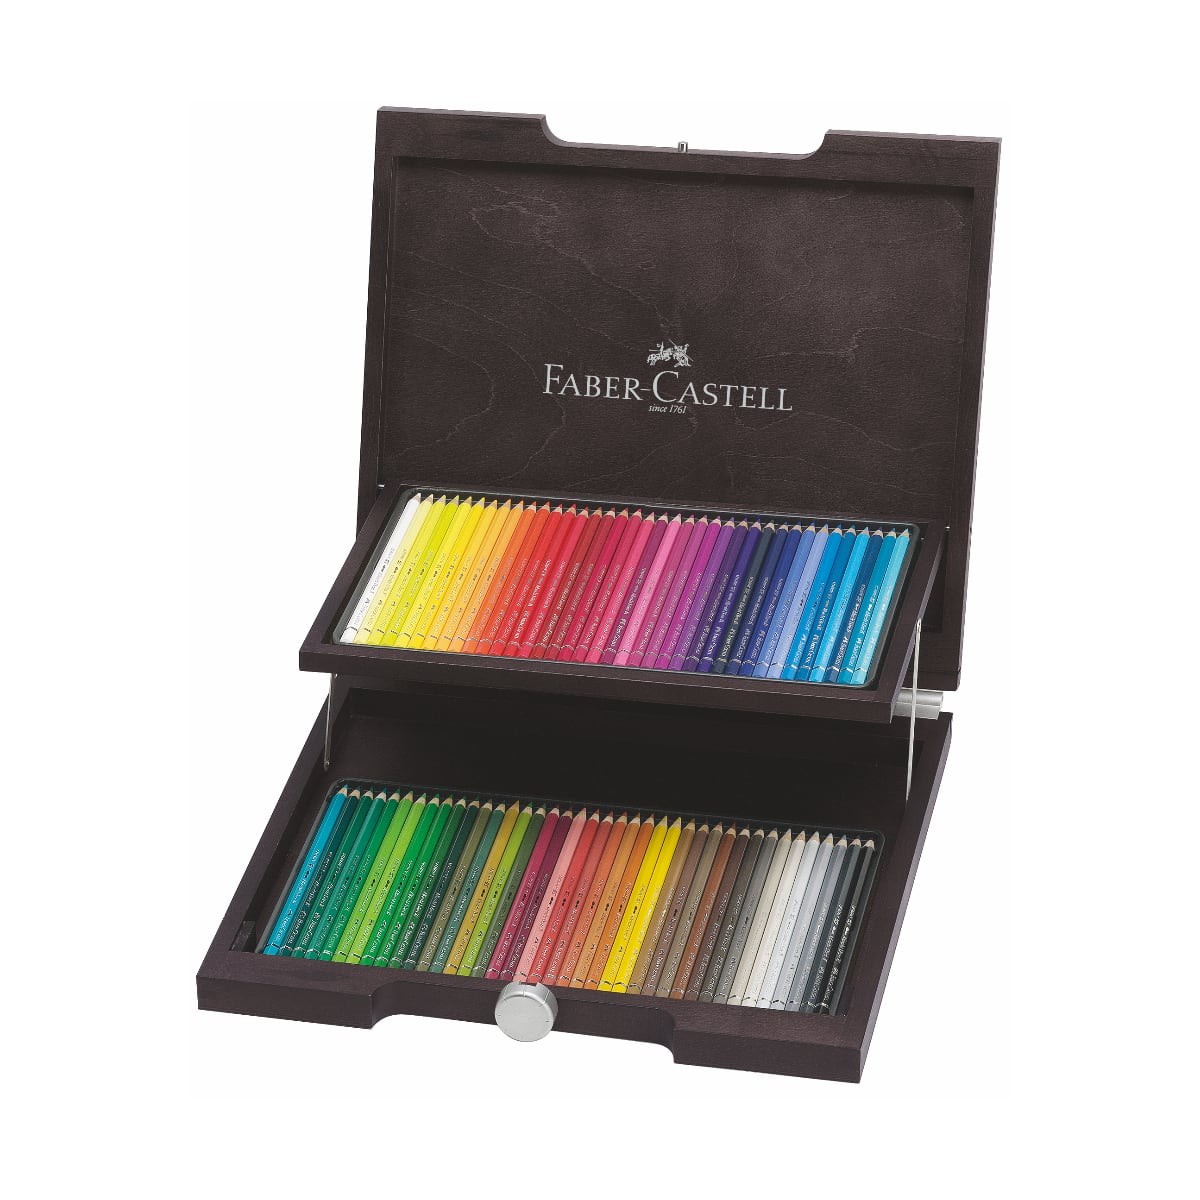 Faber-Castell Ξυλομπογιές Ακουαρέλας Albrecht Durer Πολυτελής Ξύλινη Κασετίνα 72 Χρωμάτων